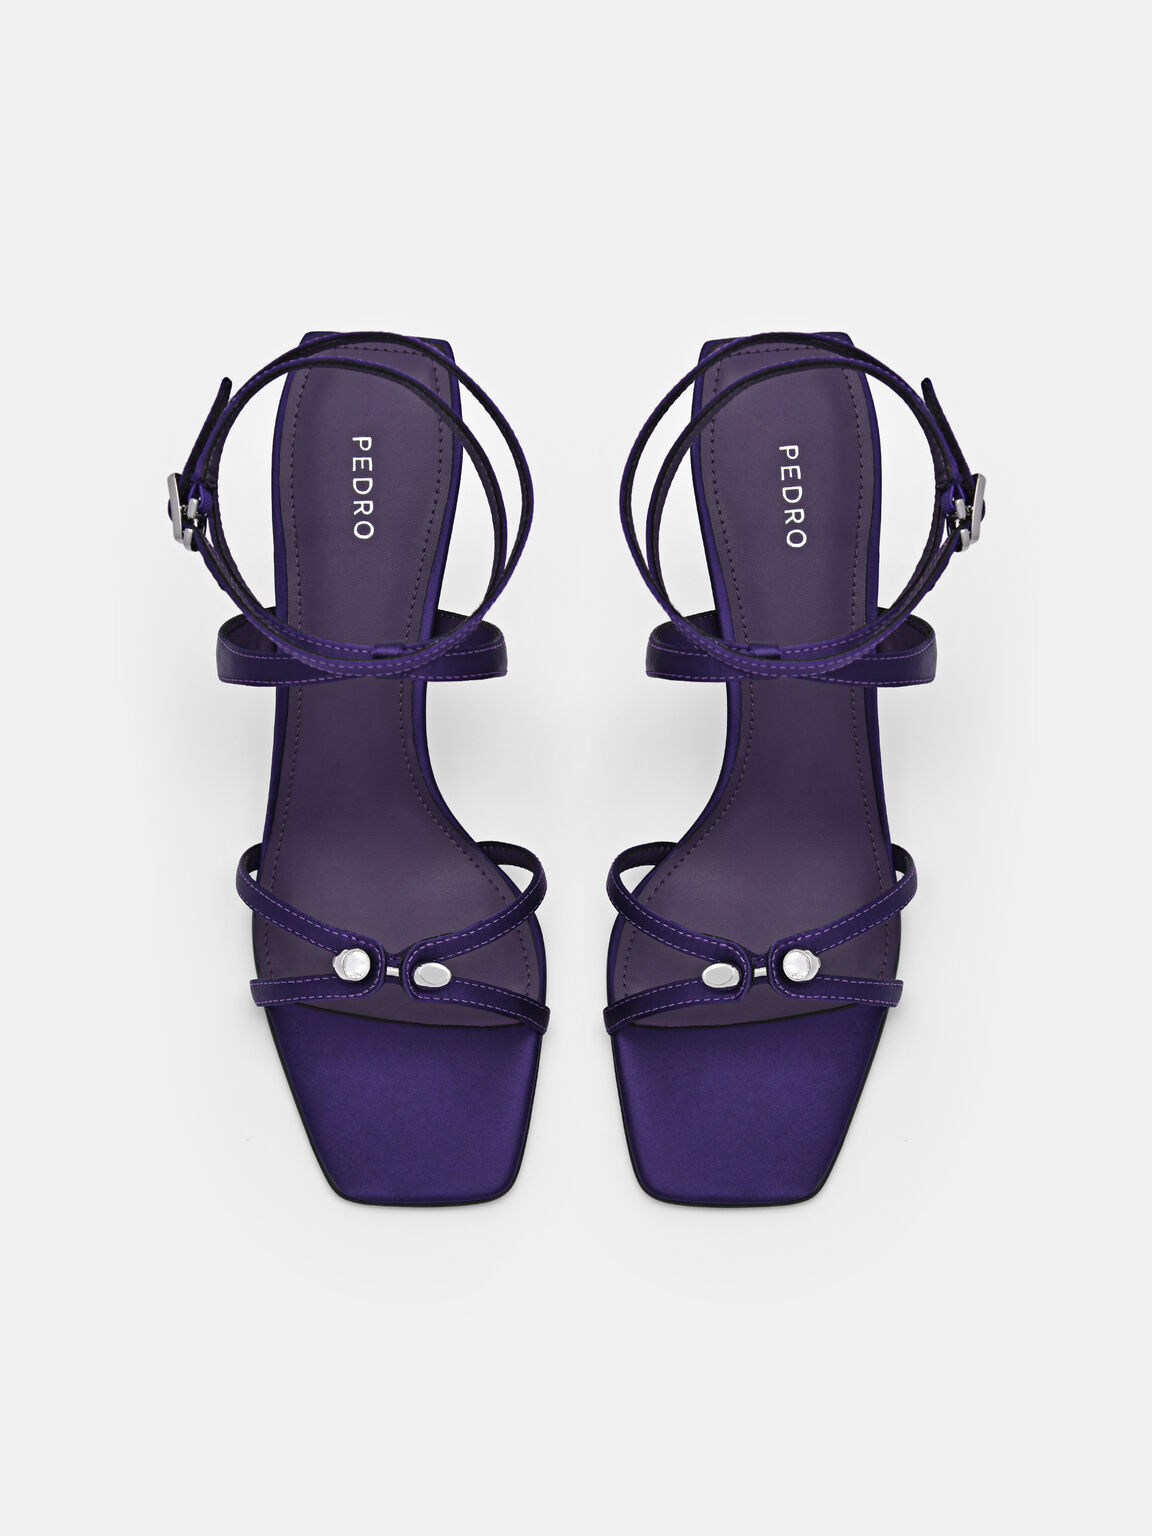 Sofia Leather Heel Sandals, Dark Purple, hi-res